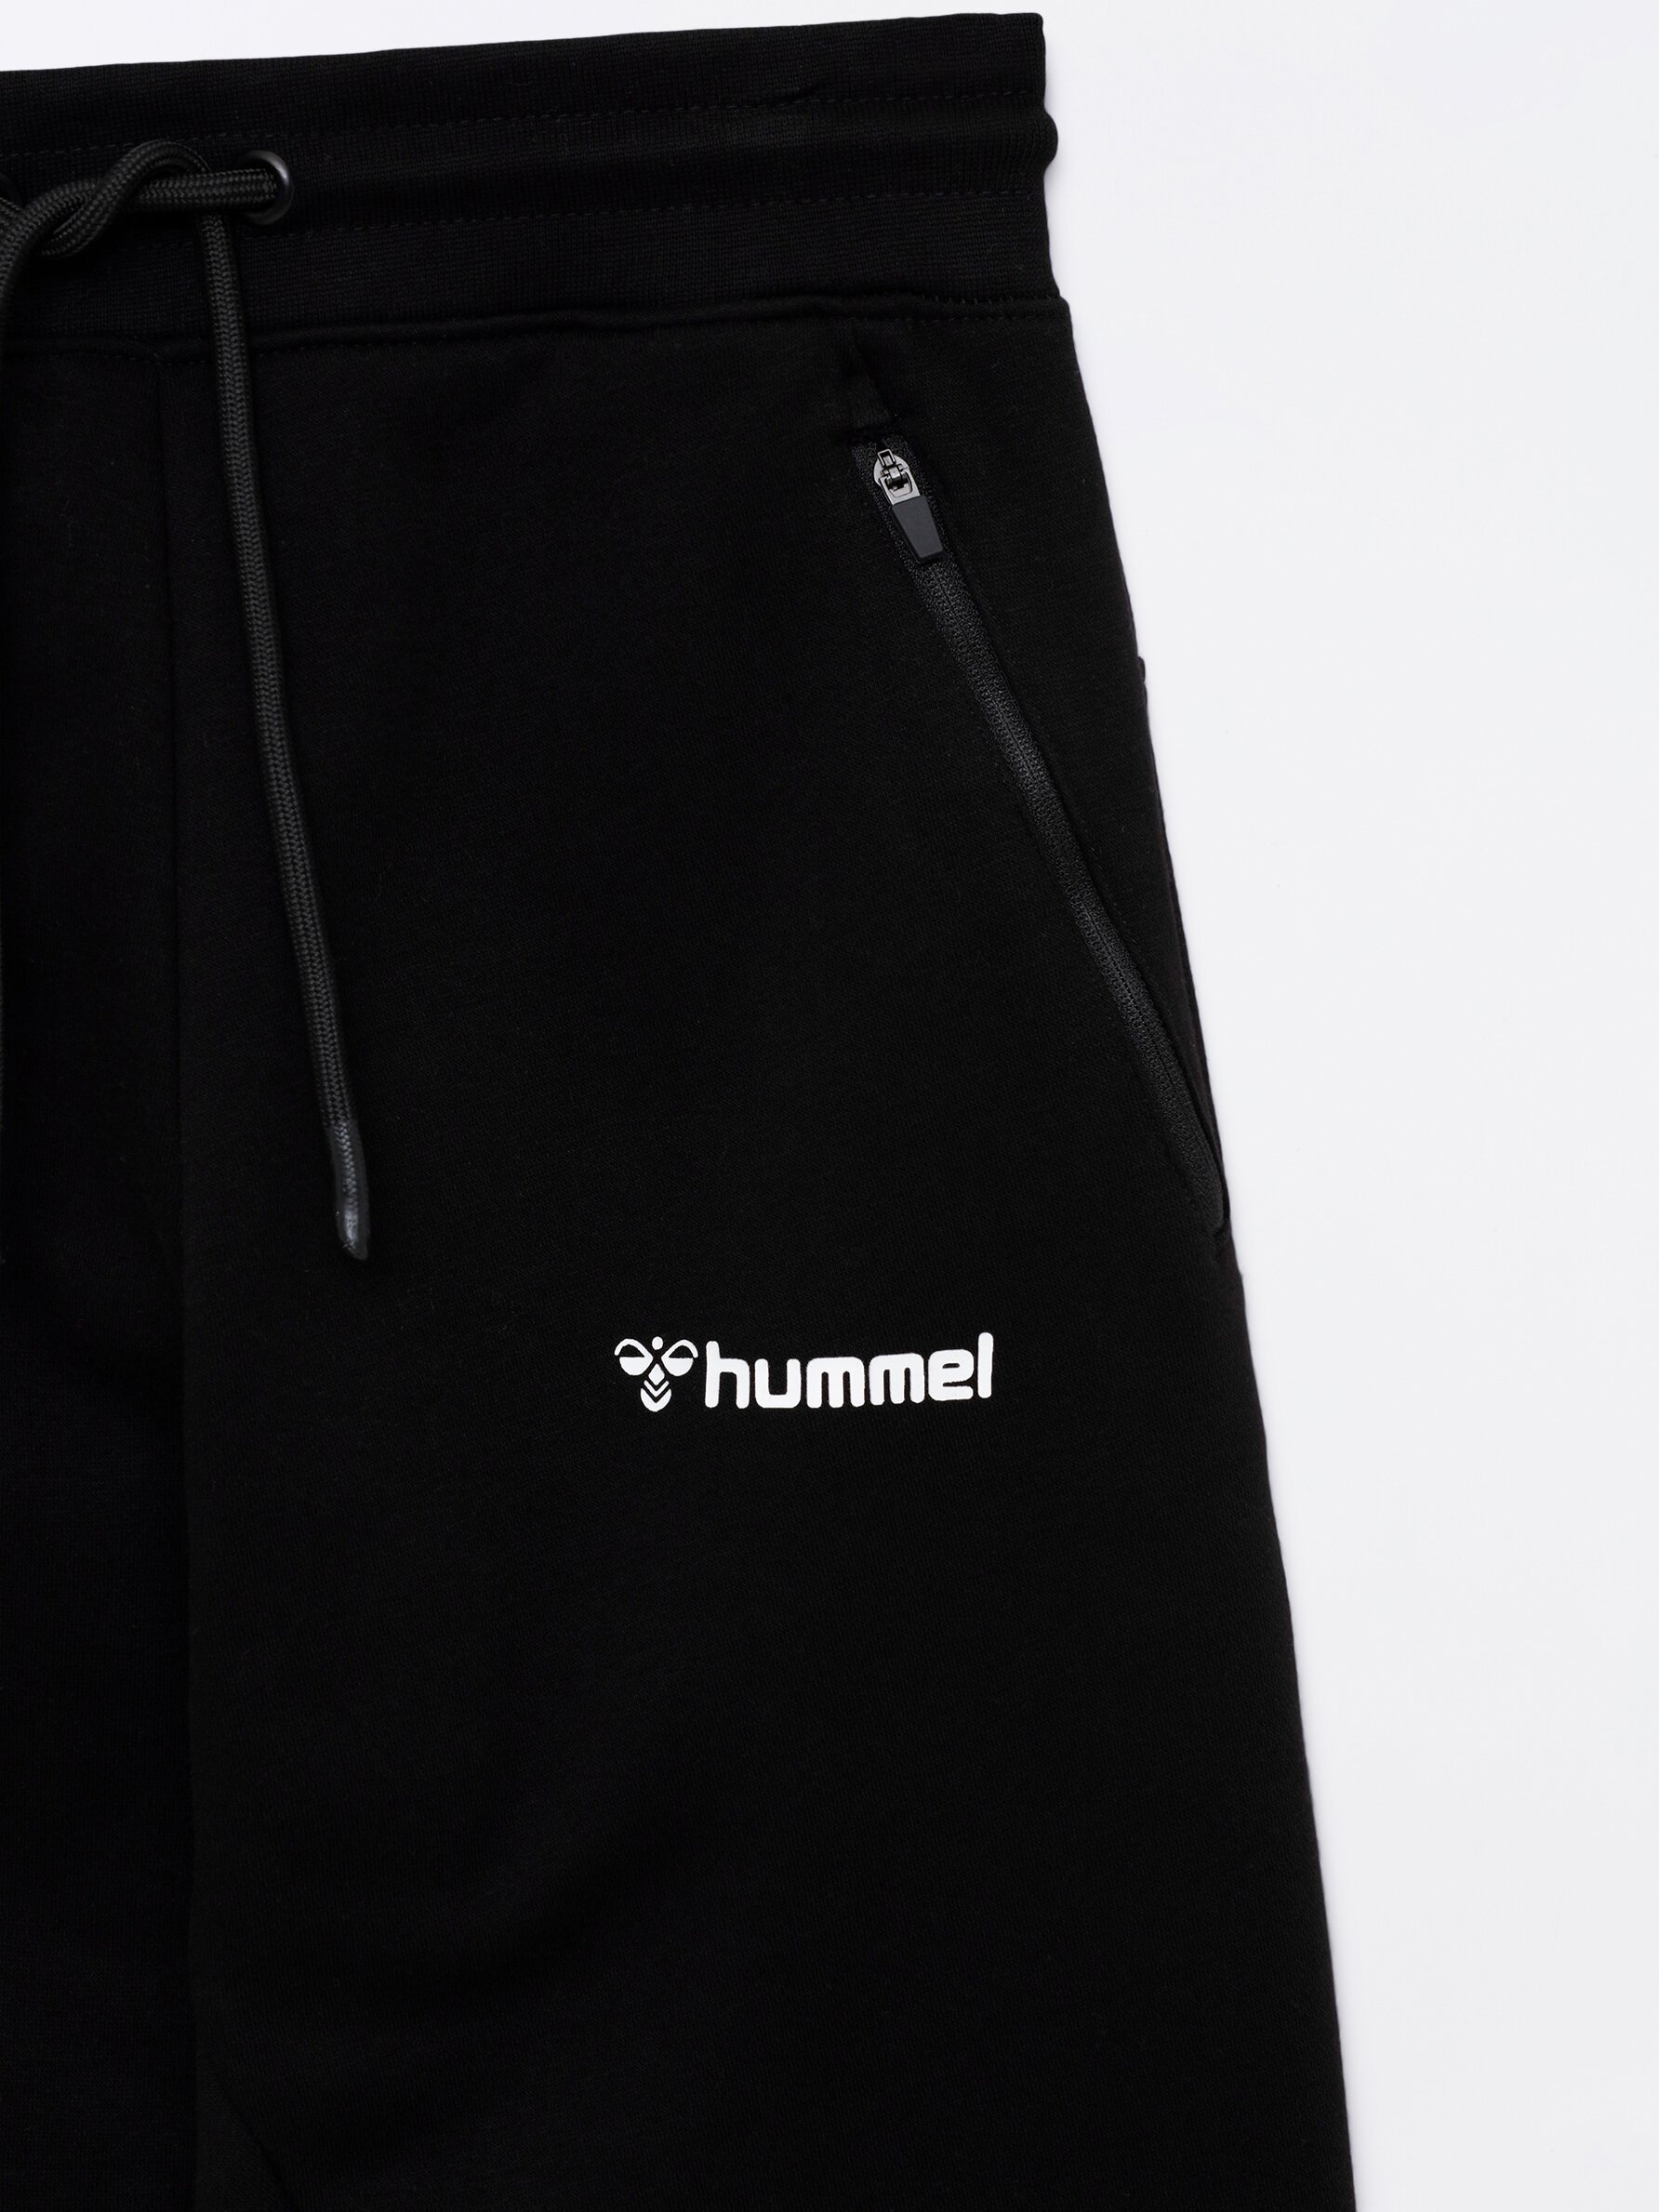 Buy Hummel Women Grey Track Pants - Track Pants for Women 7188376 | Myntra